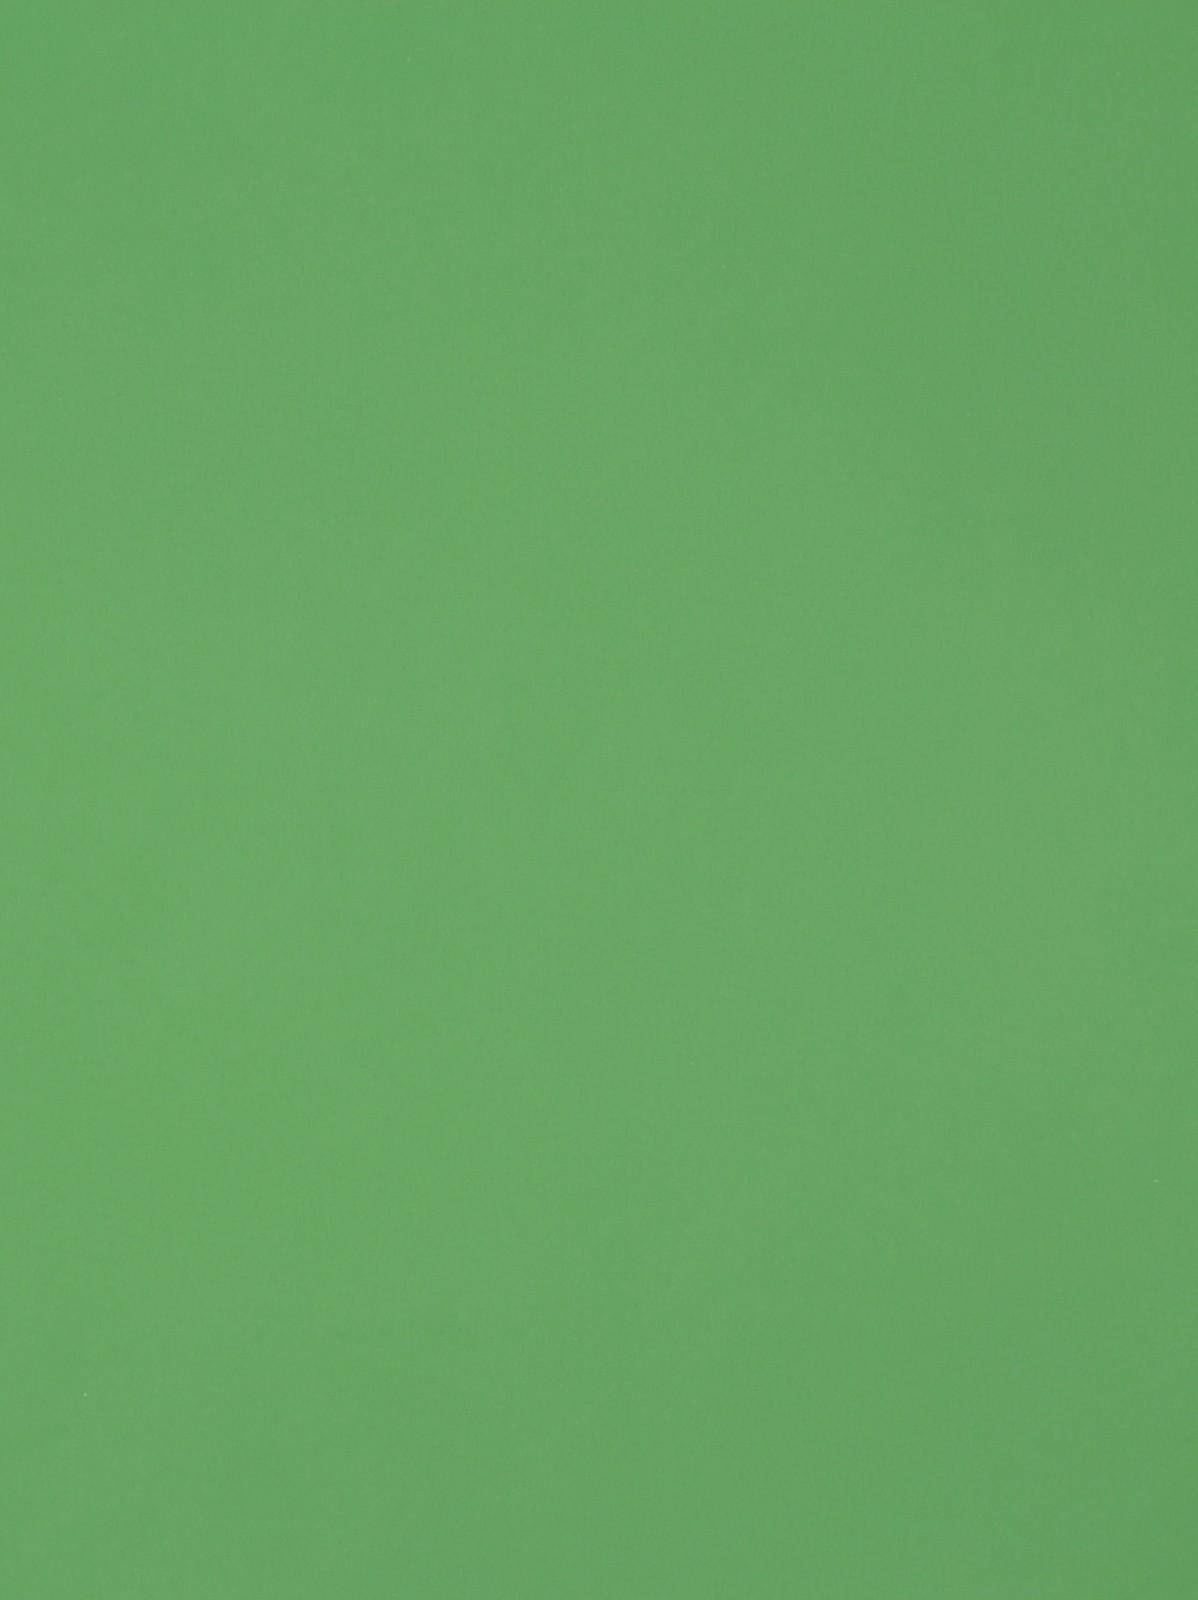 Formica Vibrant Light Green Plain Background